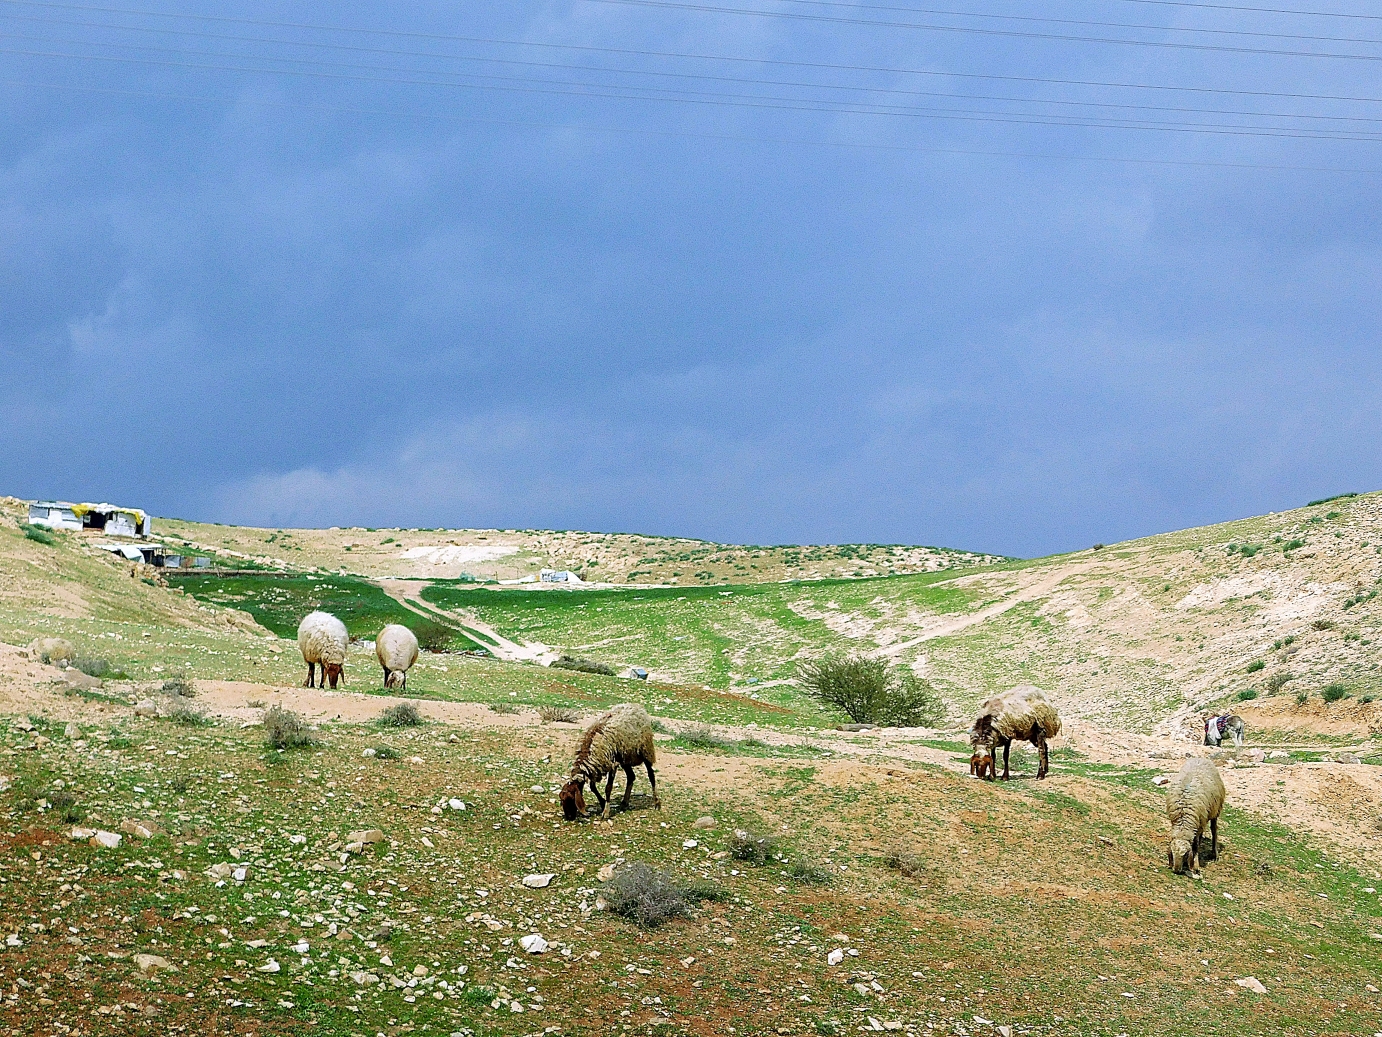 Spring sheepherding in the desert of the Jordan Valley, PhotoCredit_Sr. Amata CSFN